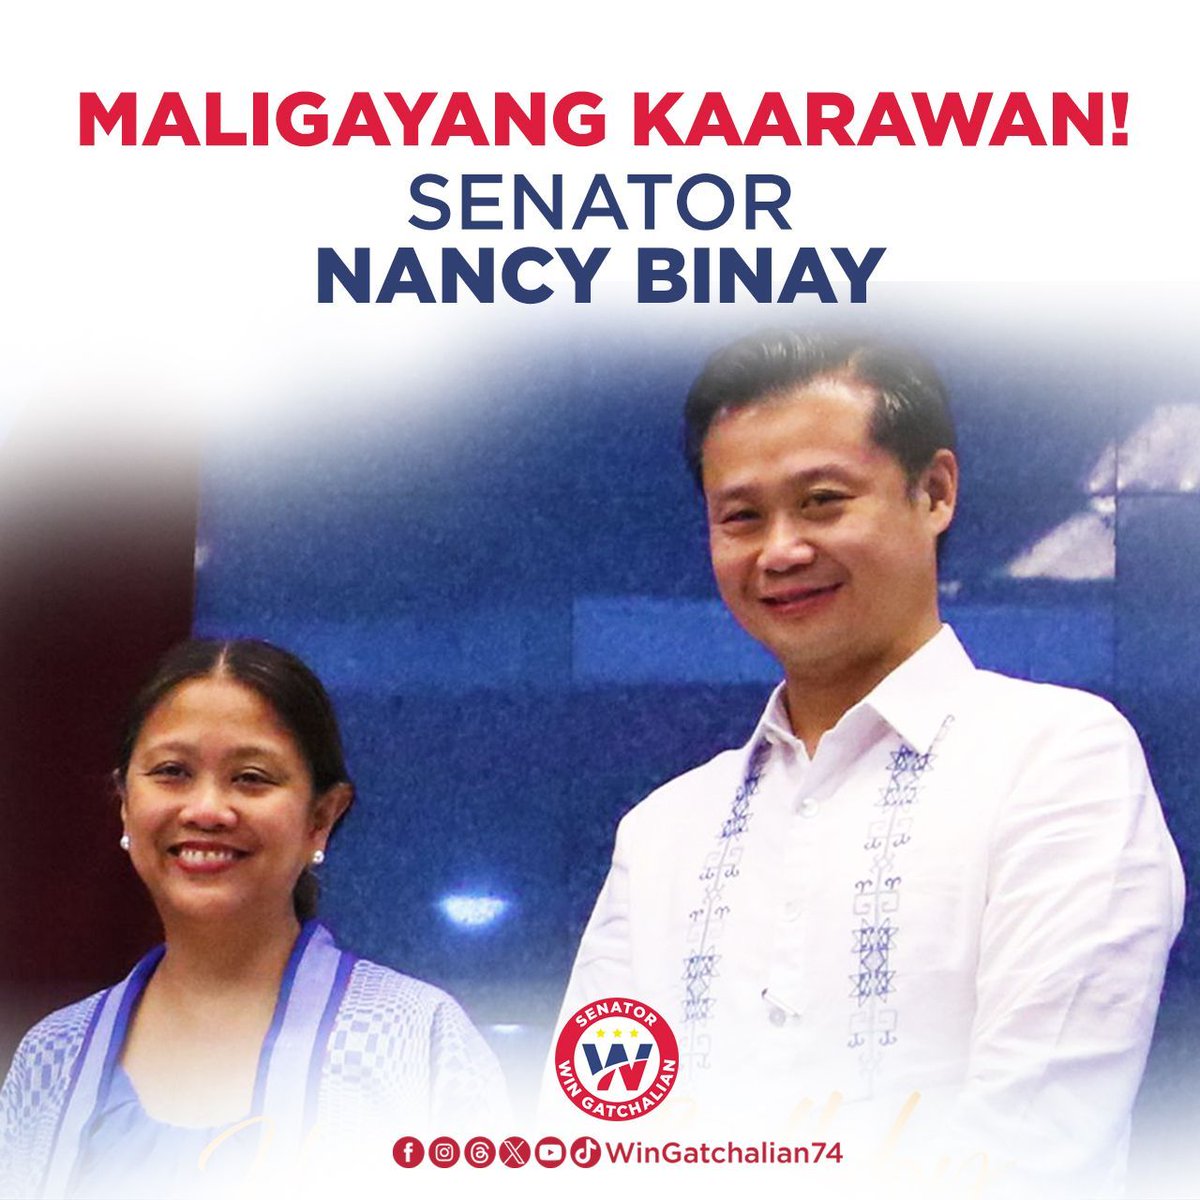 Maligayang kaarawan, @SenatorBinay!